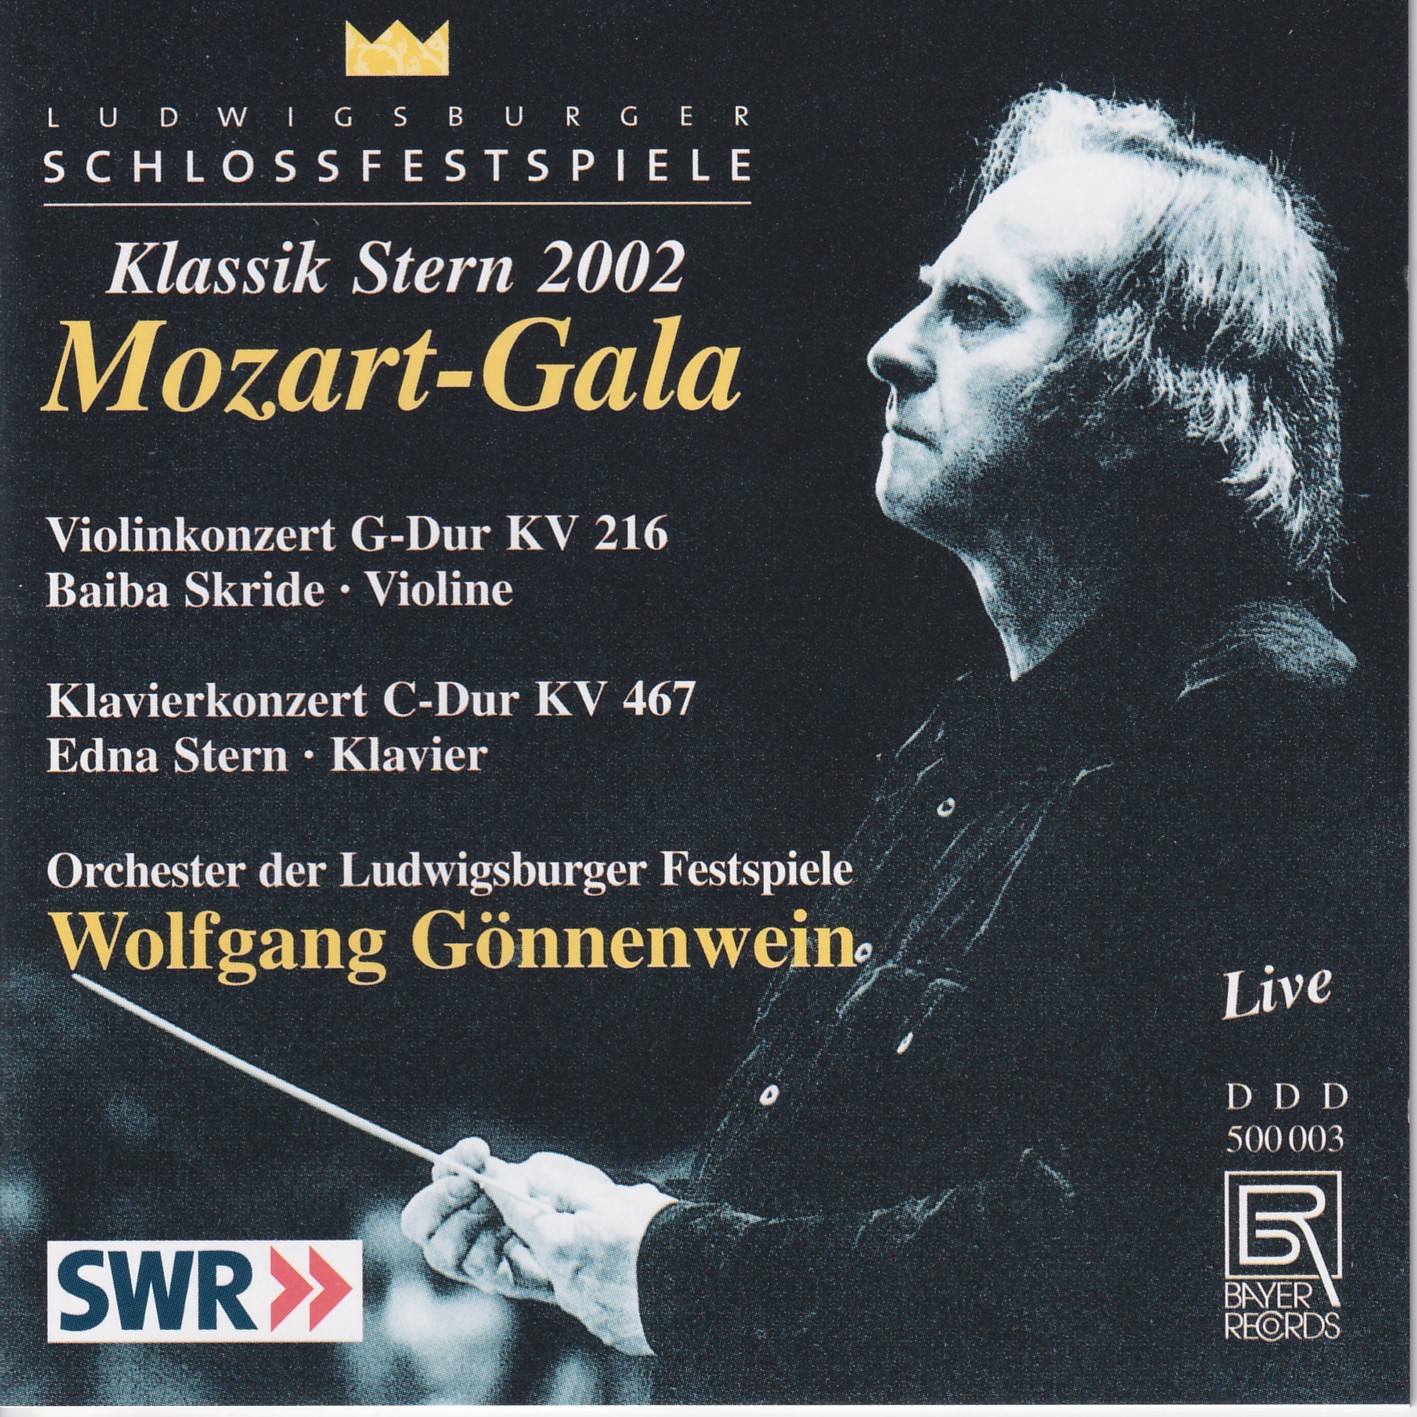 Klassik Stern 2002 - Mozart-Gala